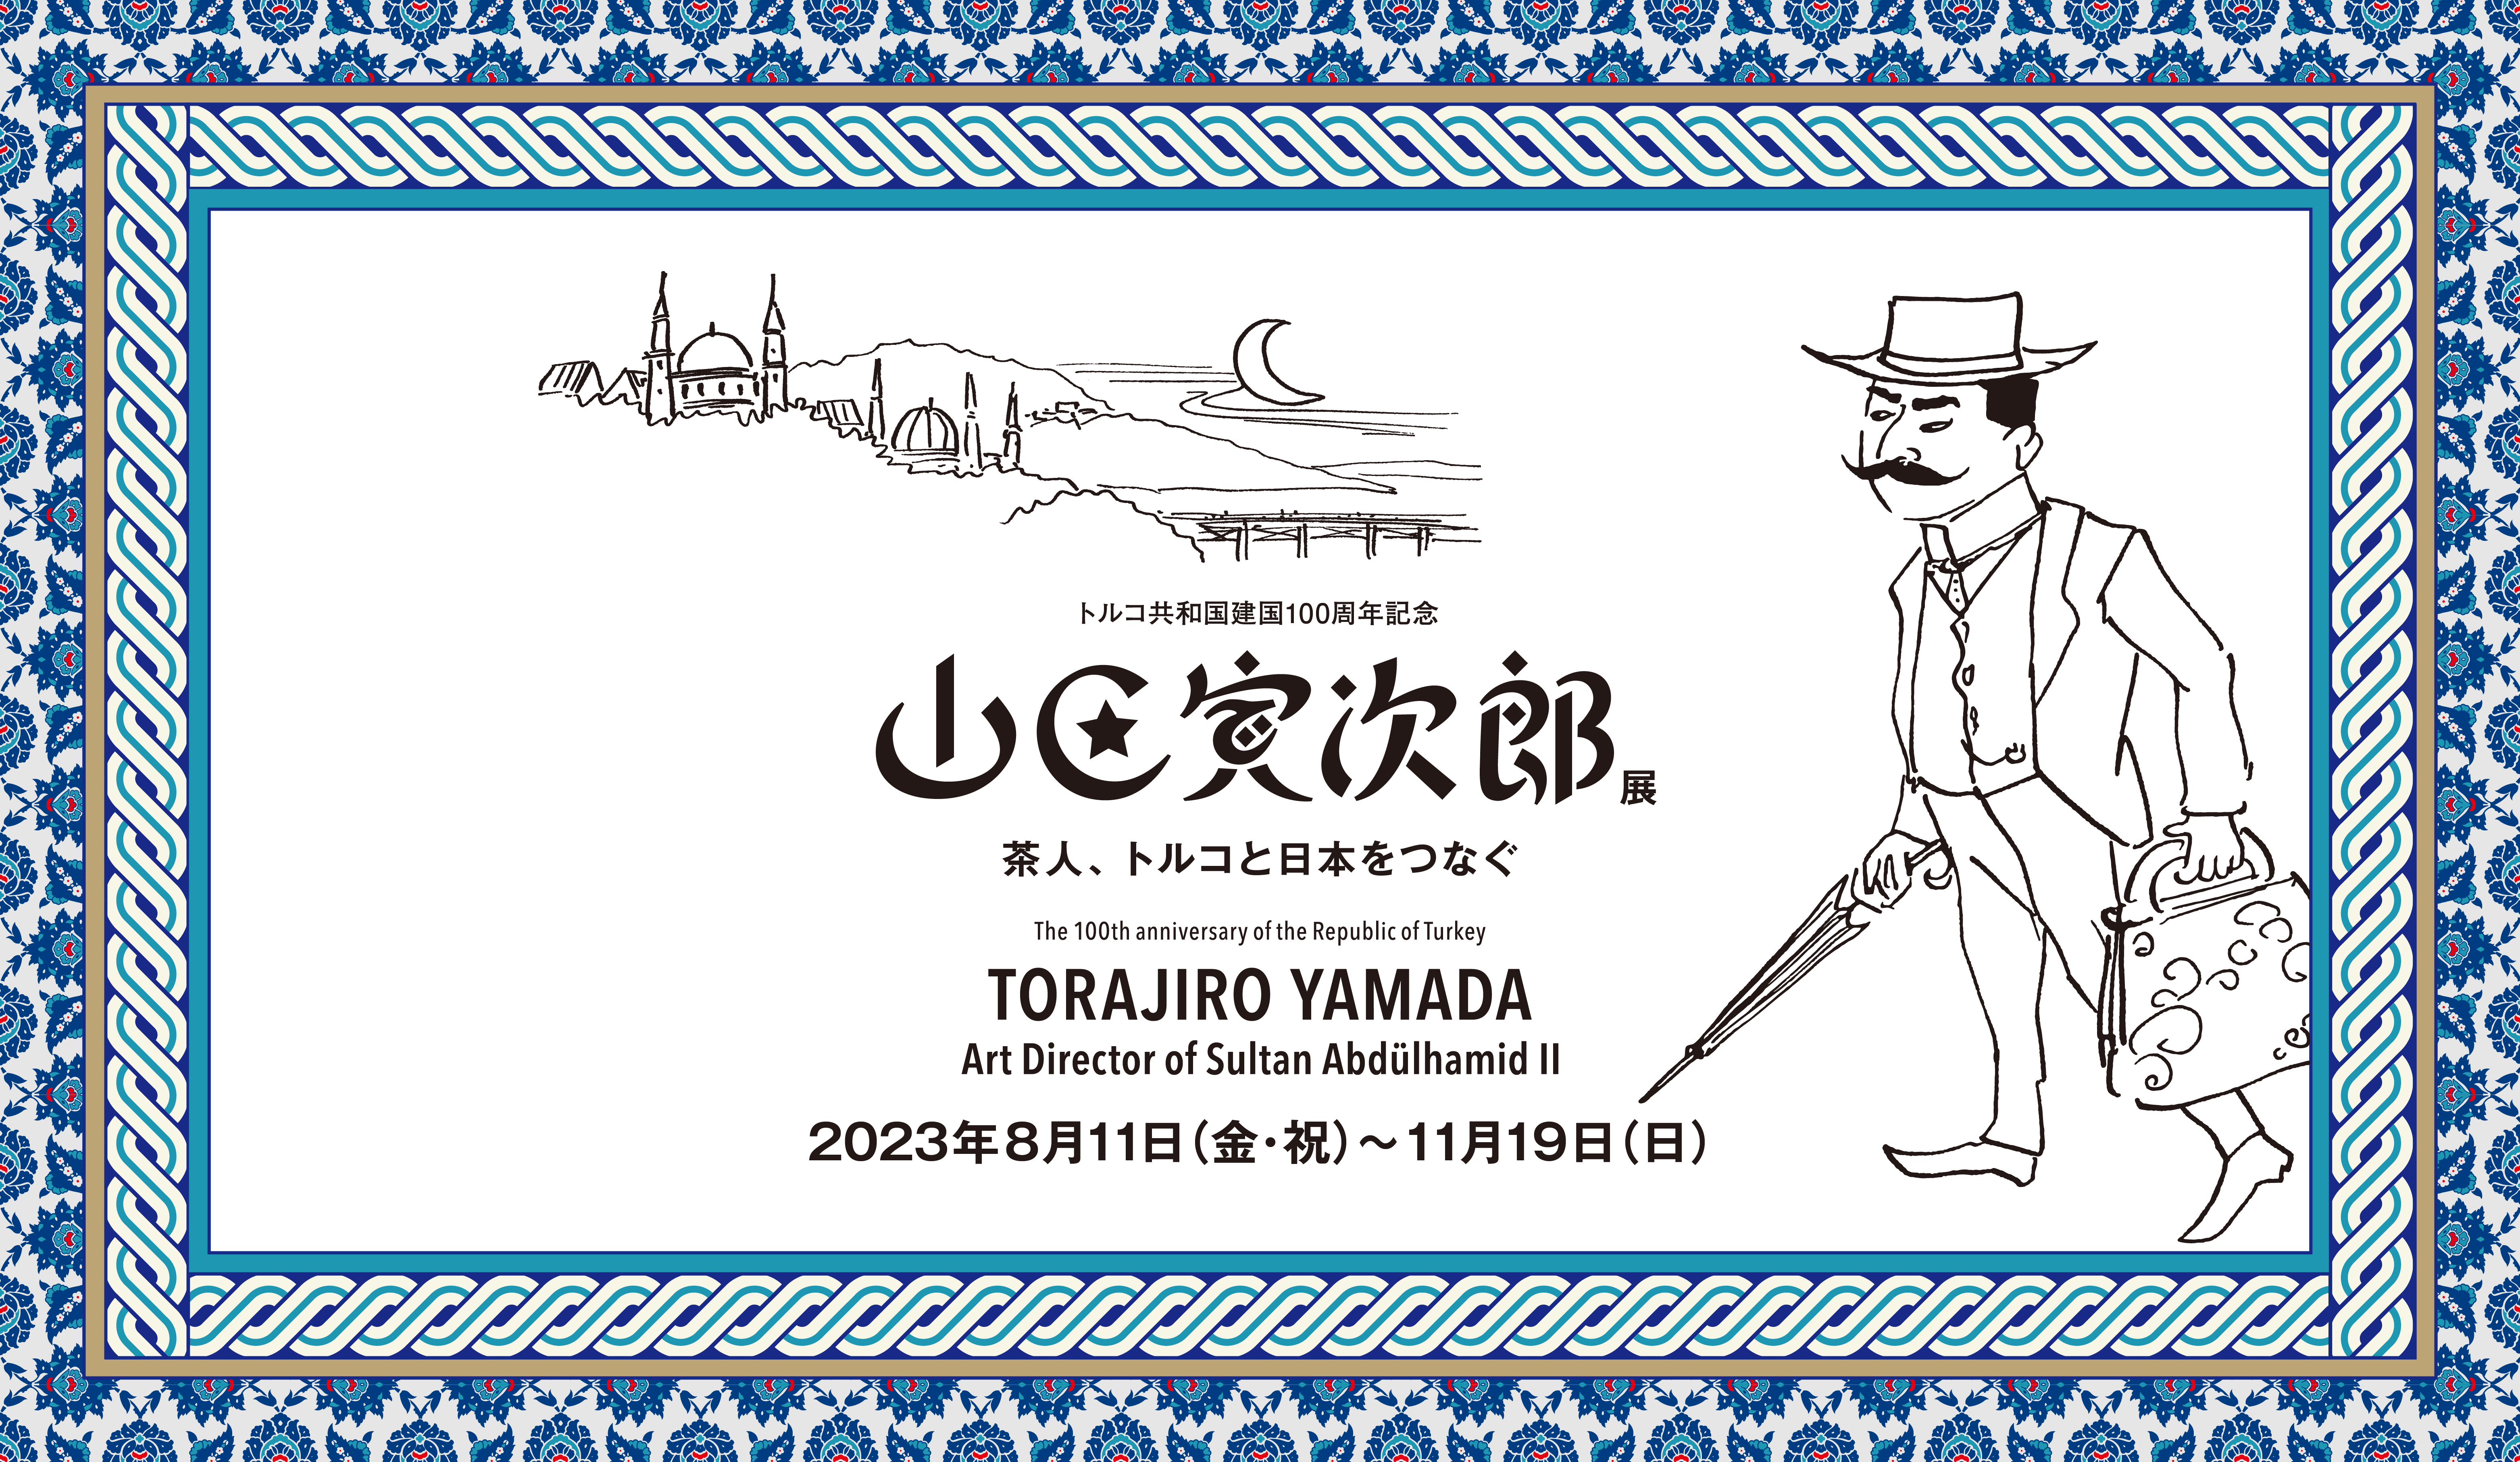 Torajiro Yamada